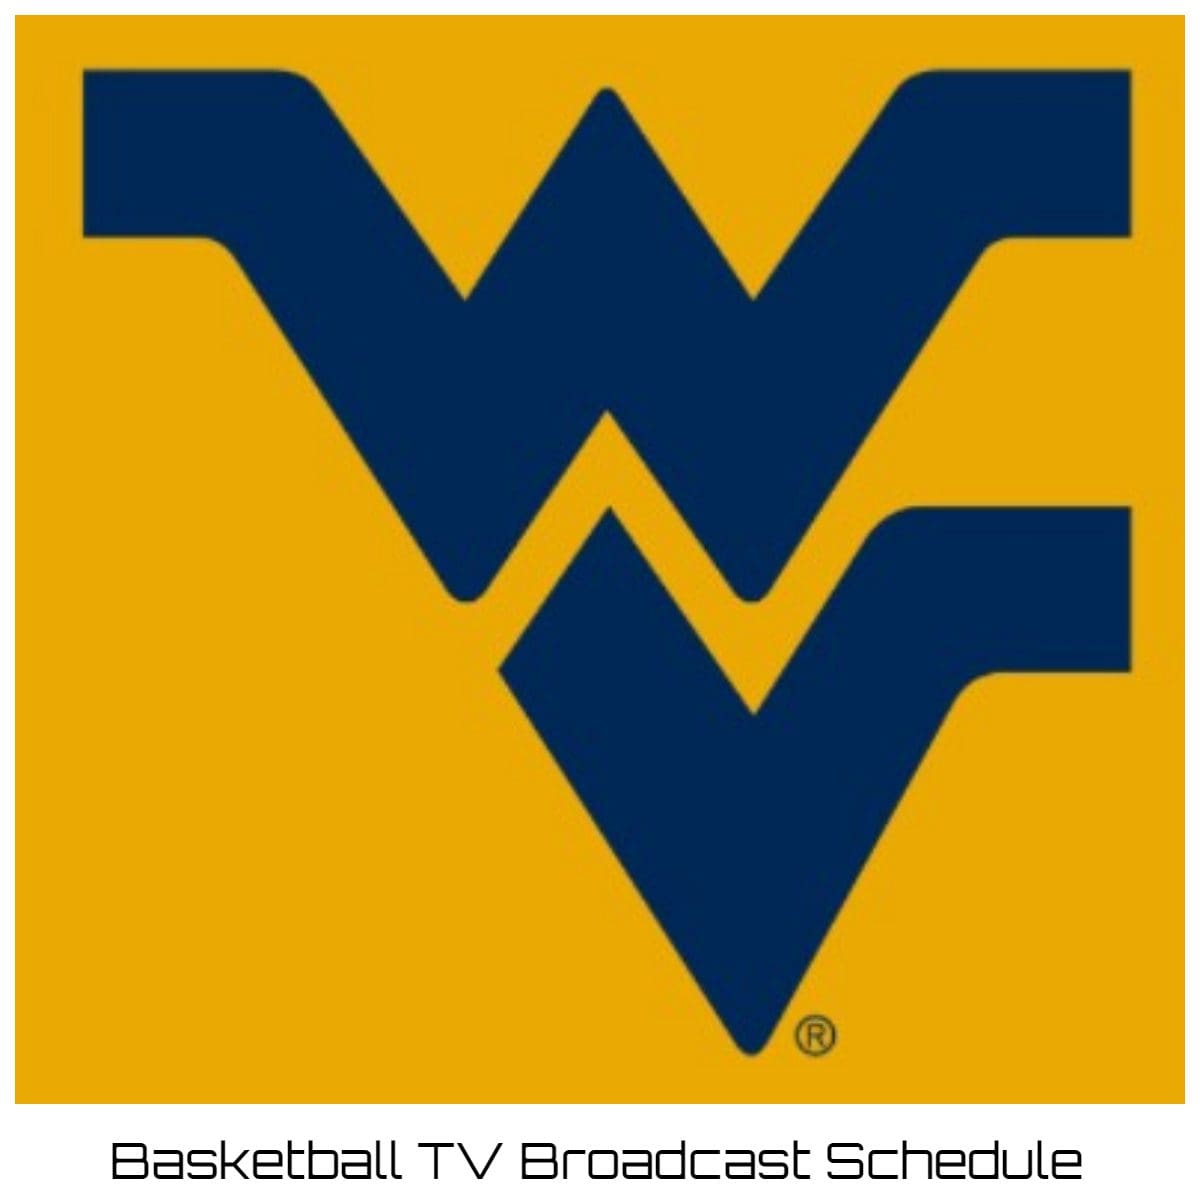 West Virginia Mountaineers Basketball TV Broadcast Schedule